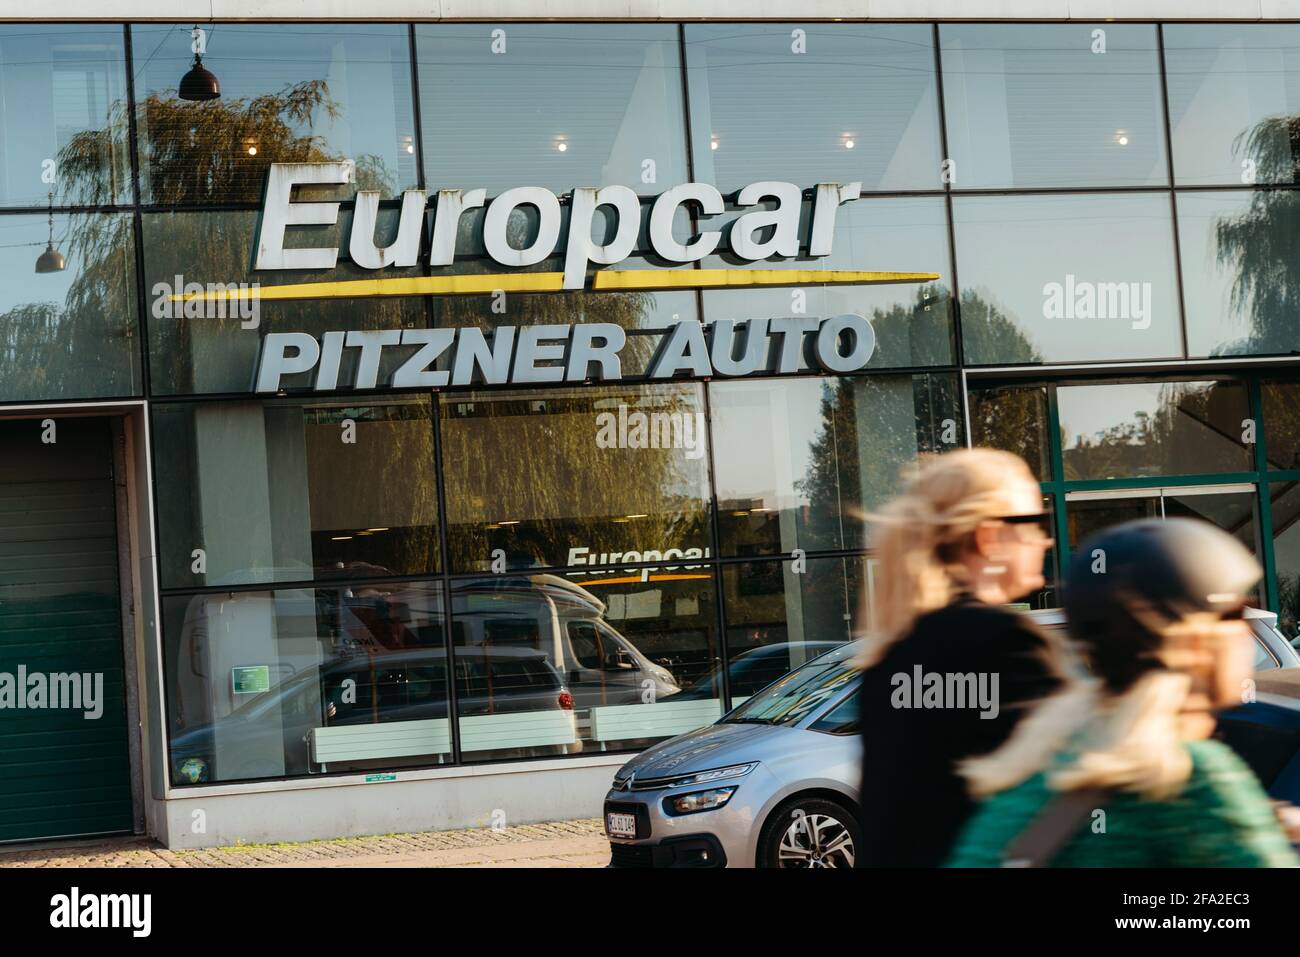 Copenhagen, Denmark - September 14, 2020. Europcar Pitzner Auto company located at street in Copenhagen Stock Photo